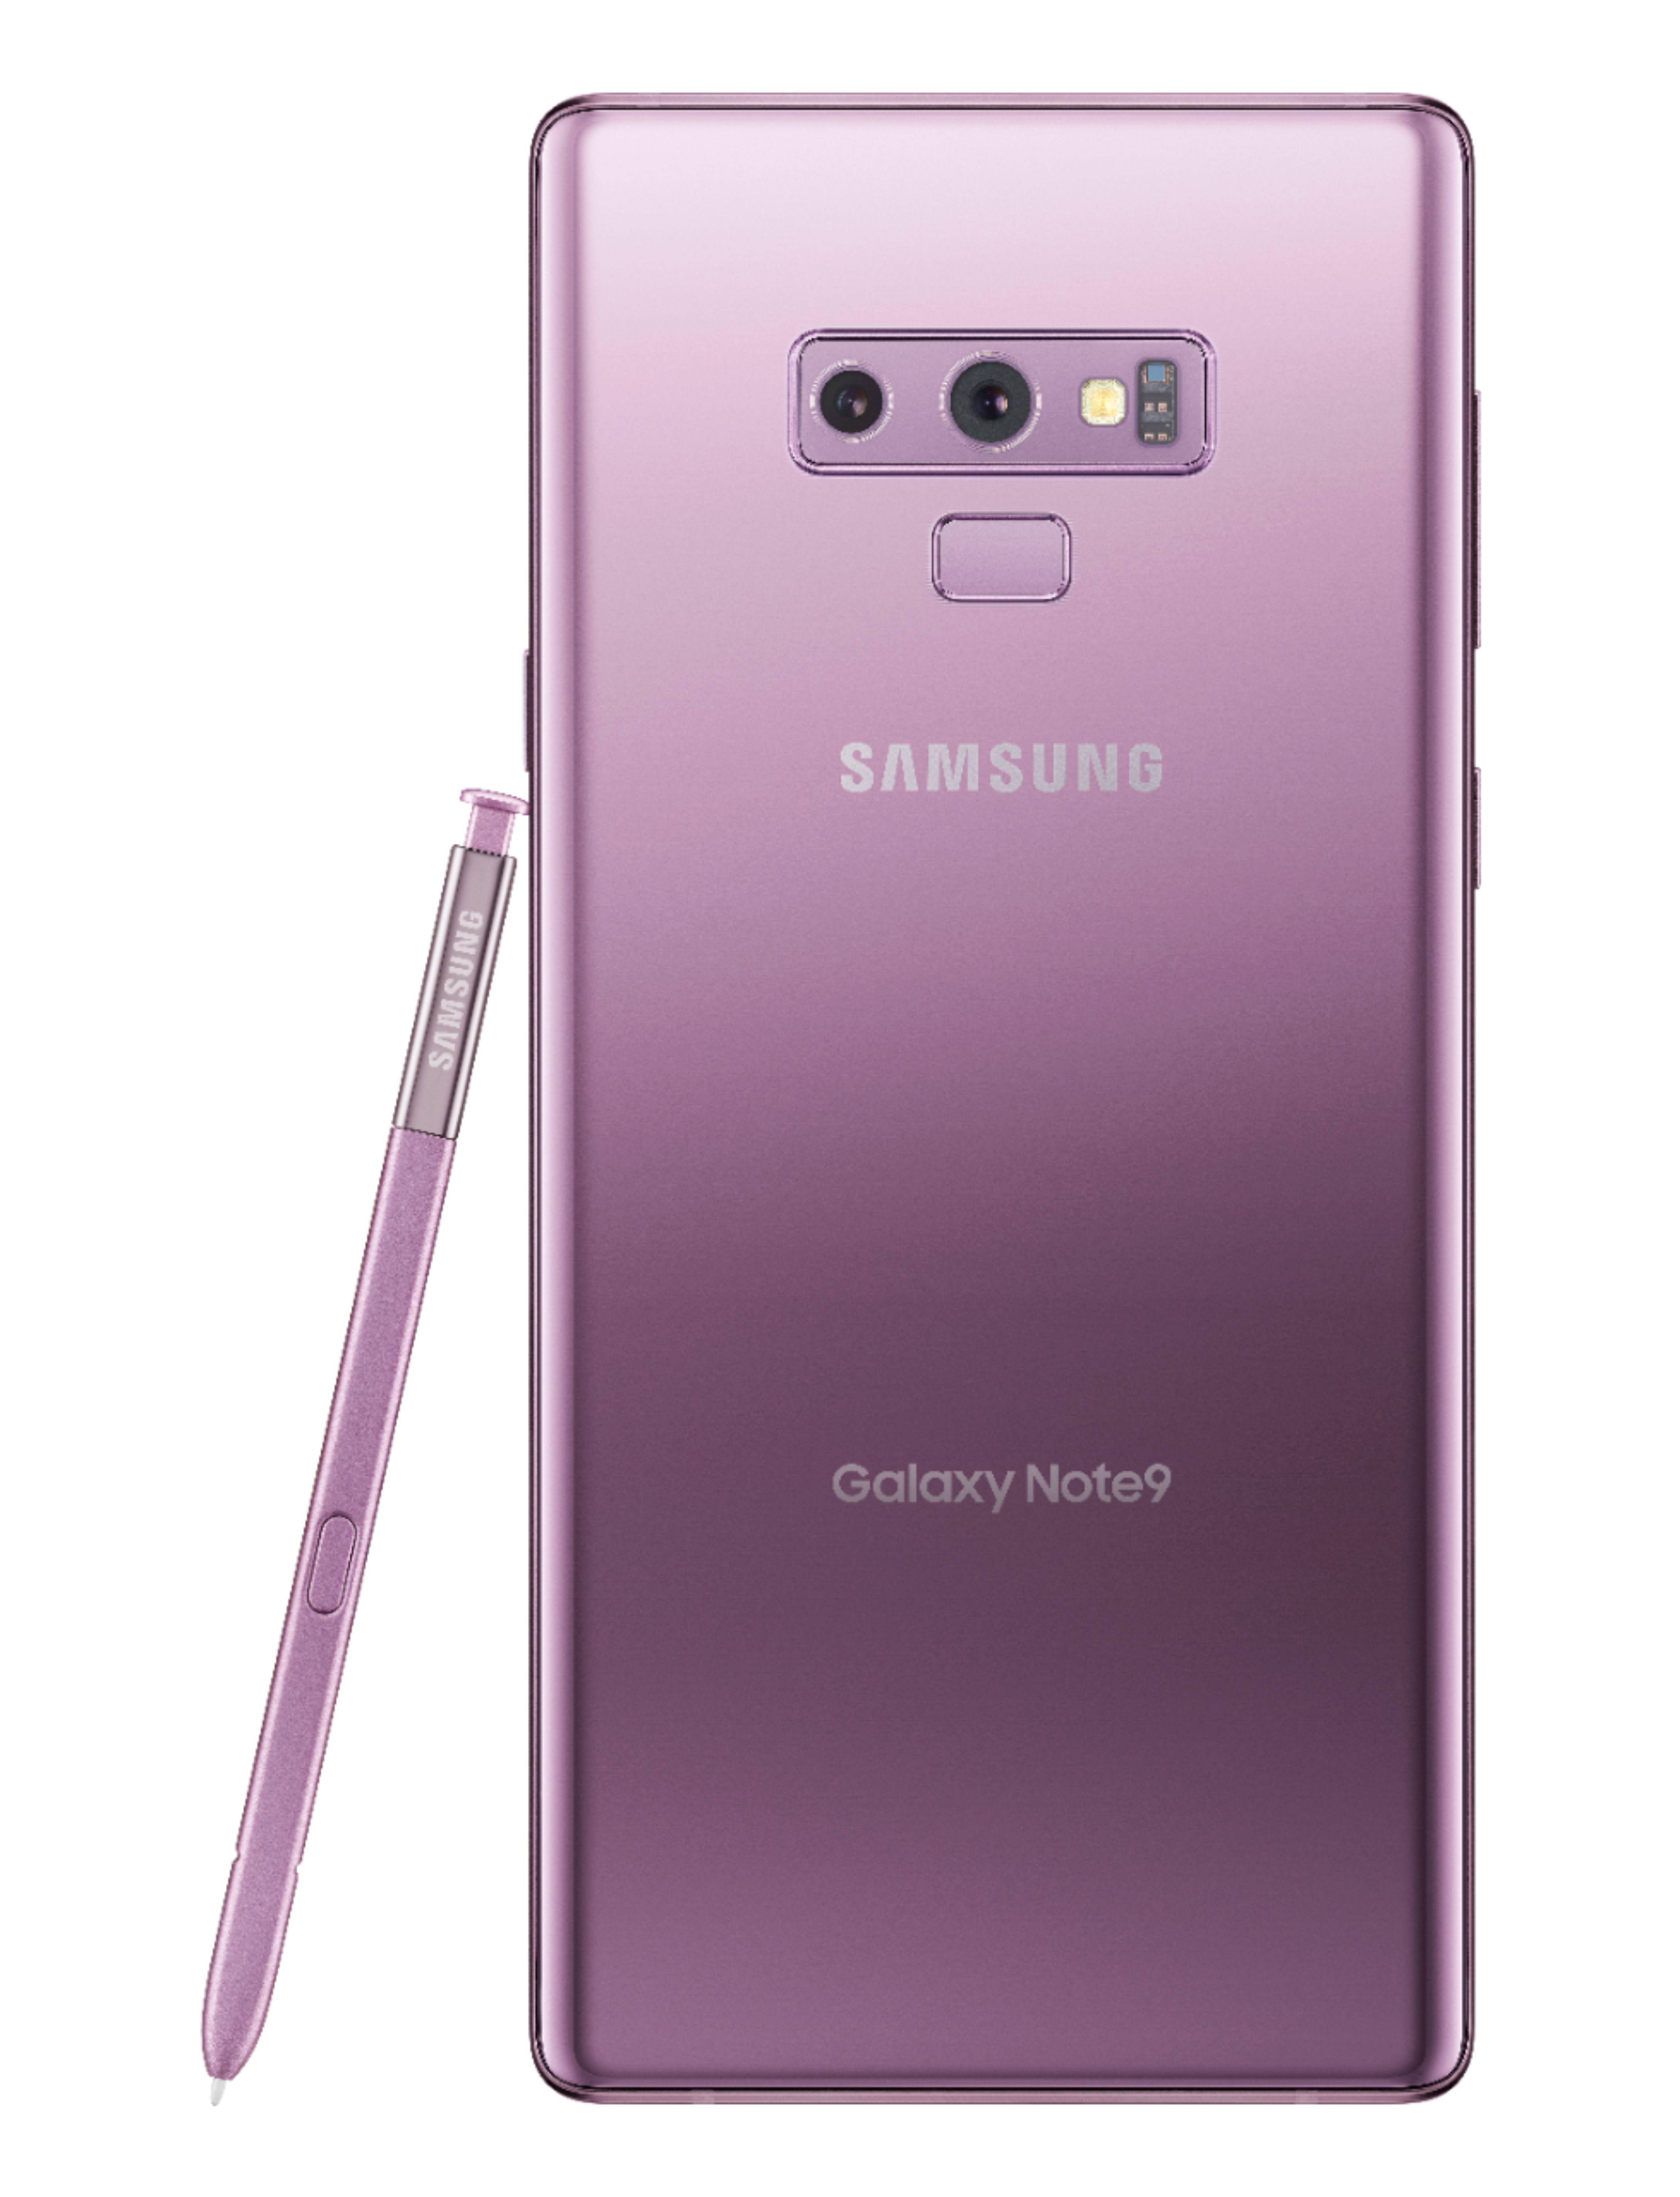 Samsung - Geek Squad Certified Refurbished Galaxy Note9 128GB